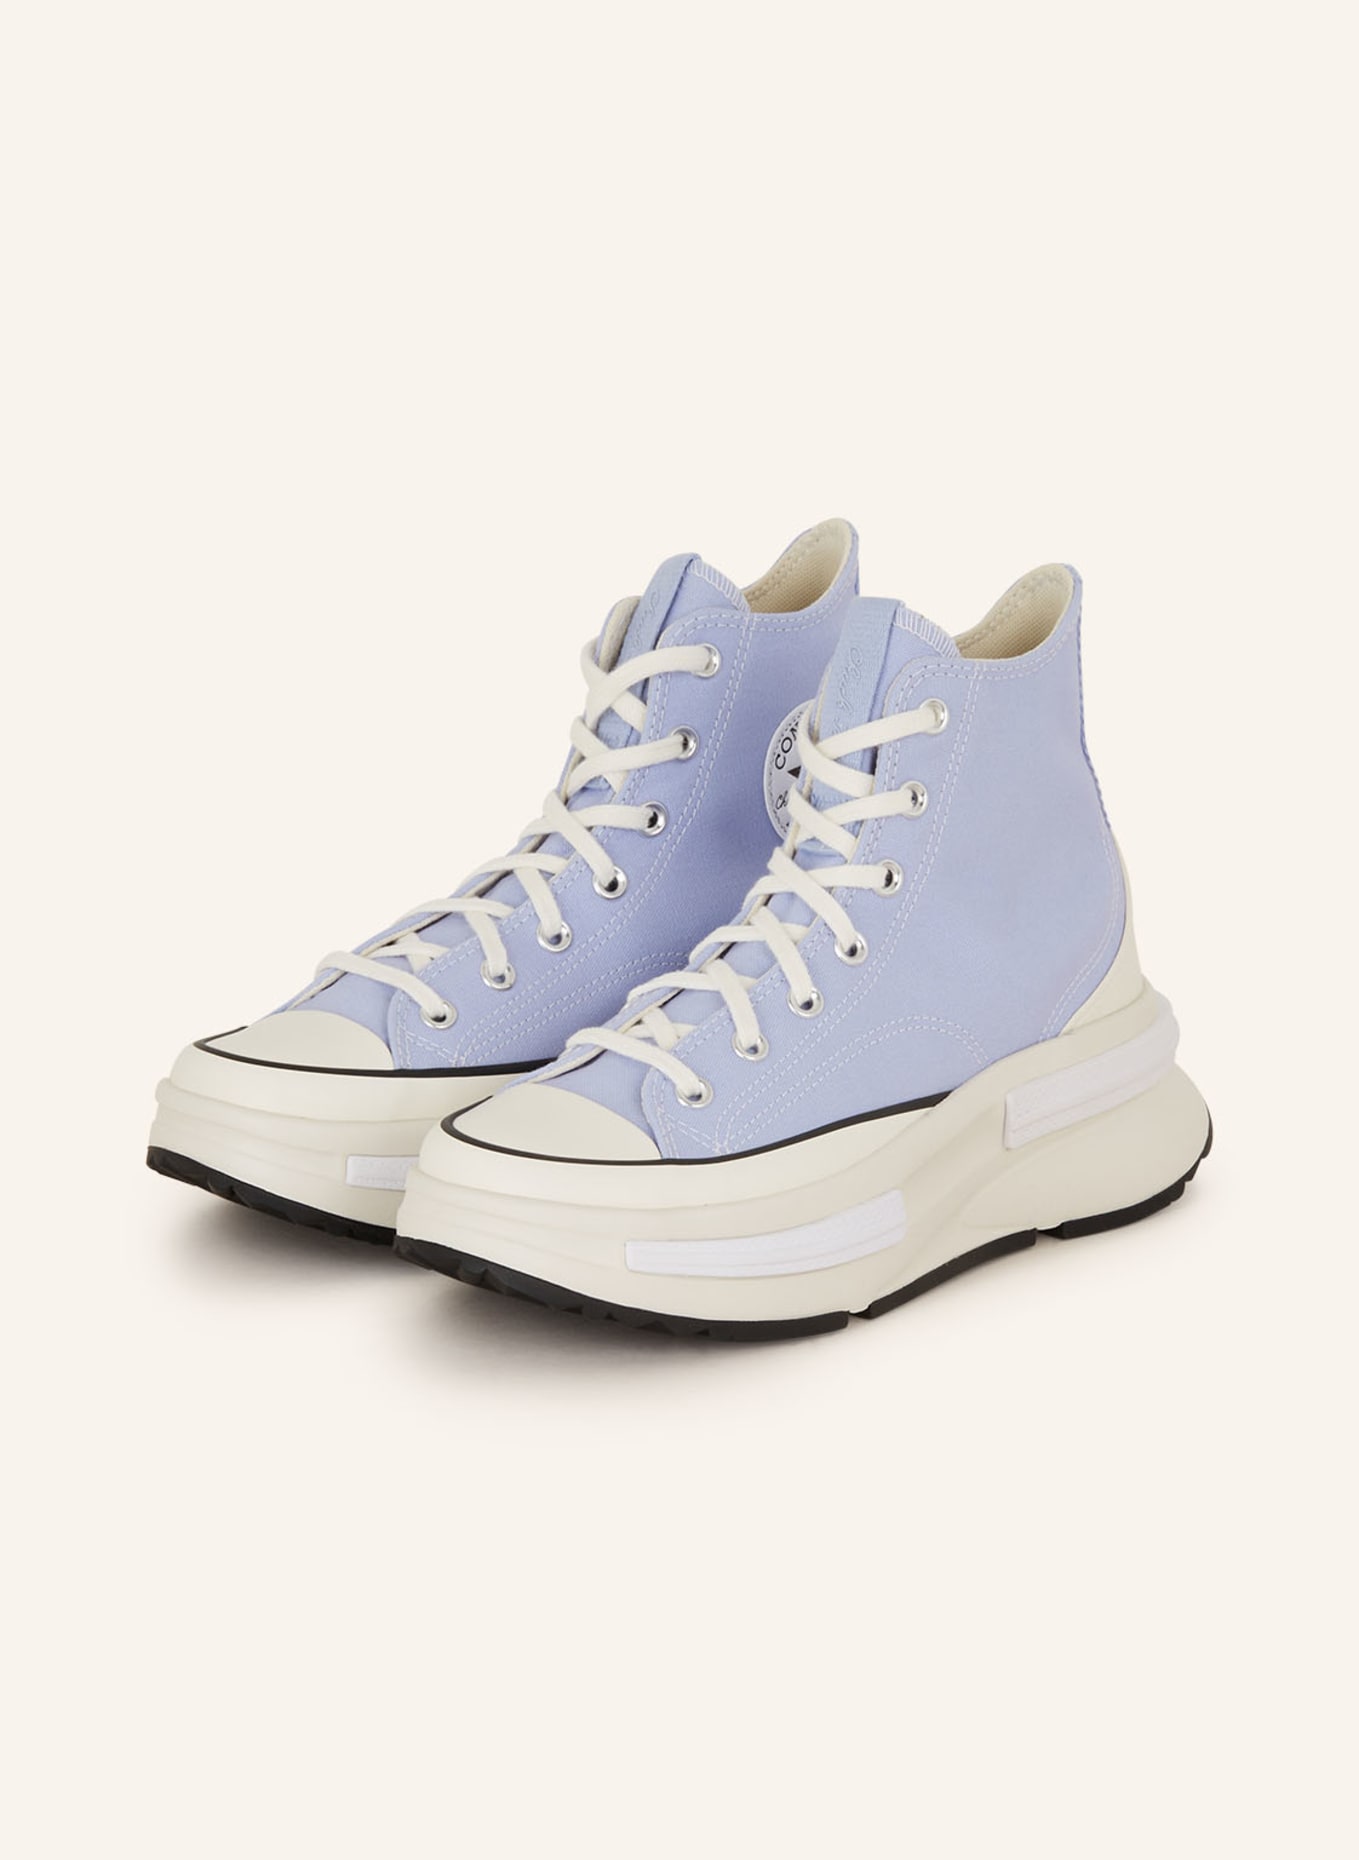 CONVERSE Hightop-Sneaker RUN STAR LEGACY, Farbe: HELLLILA (Bild 1)